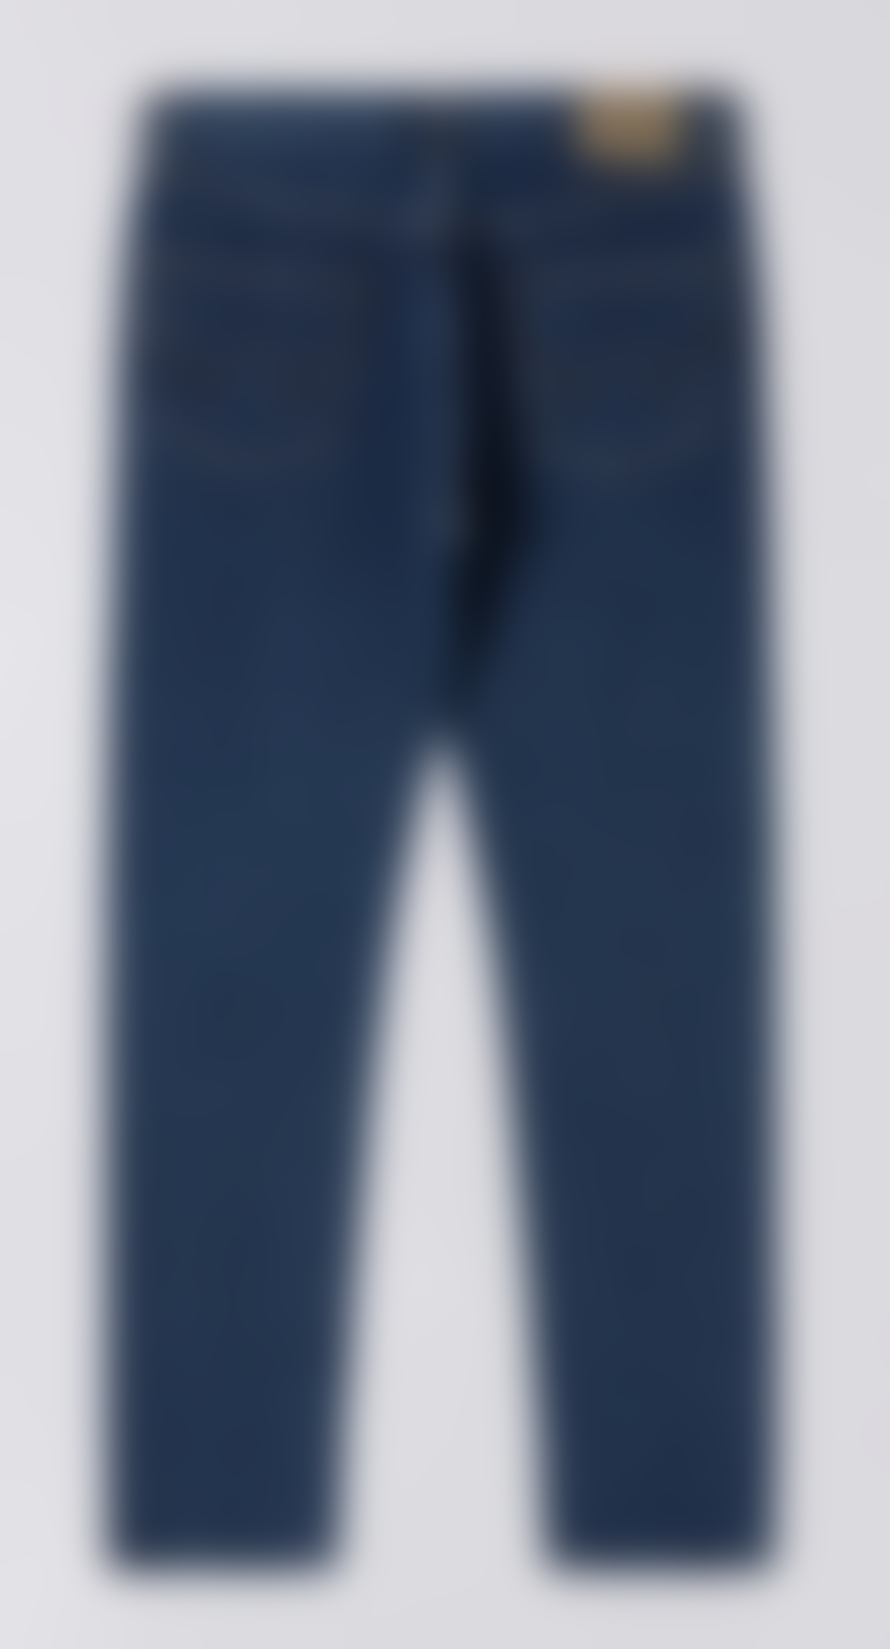 Edwin 'Made in Japan' Slim Tapered Left Hand Denim Jeans (Blue - Akira Wash)